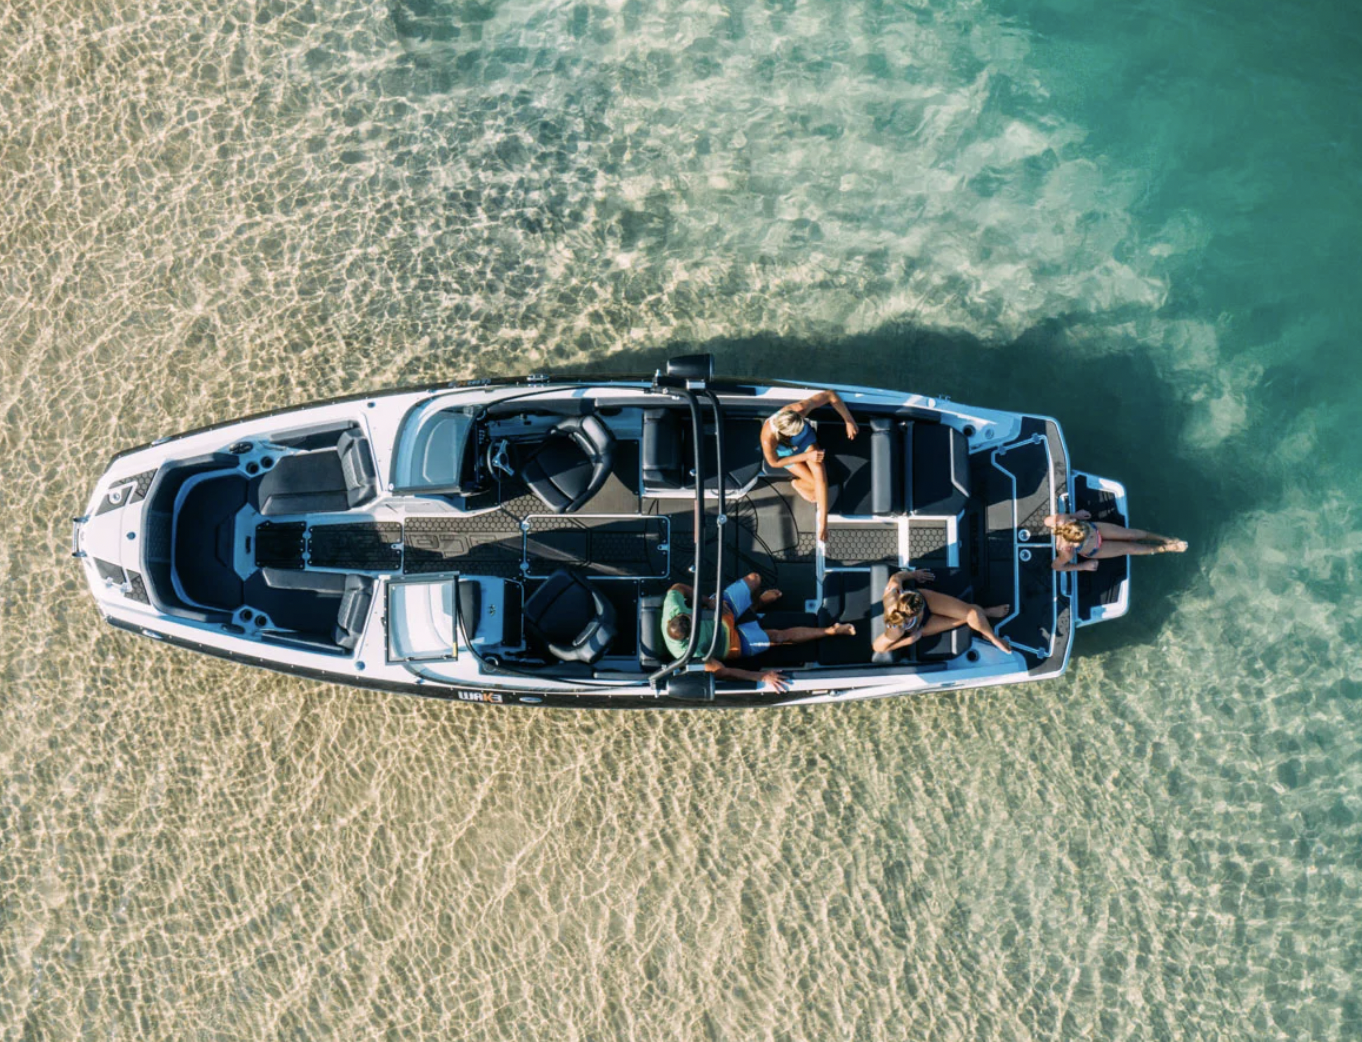 Fishing boats: a buyer's guide - boats.com